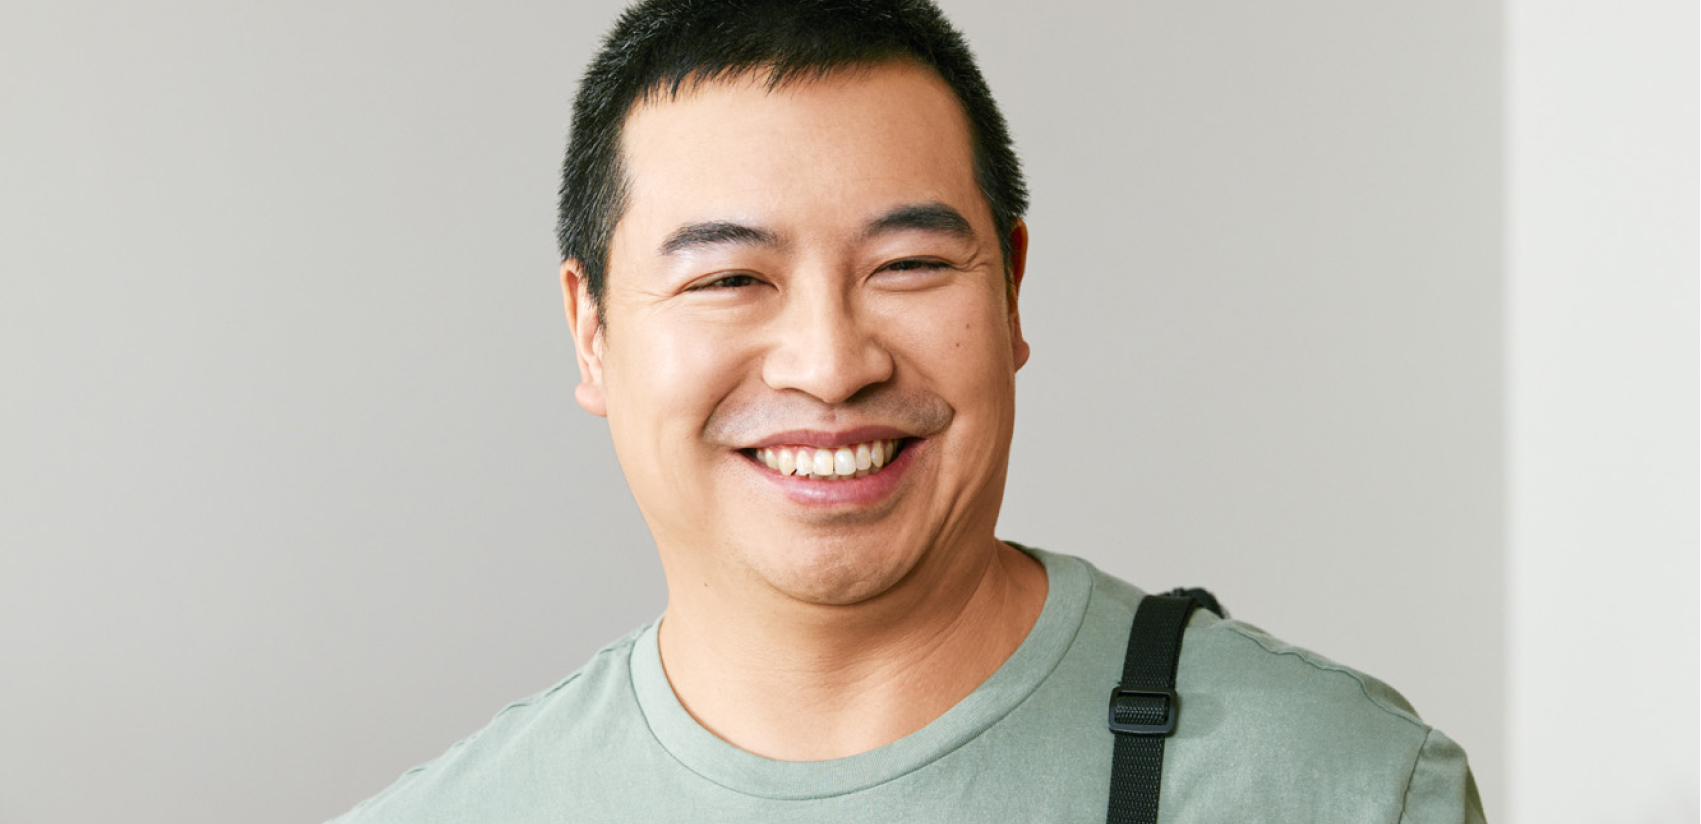 Guy Smiling - grey background